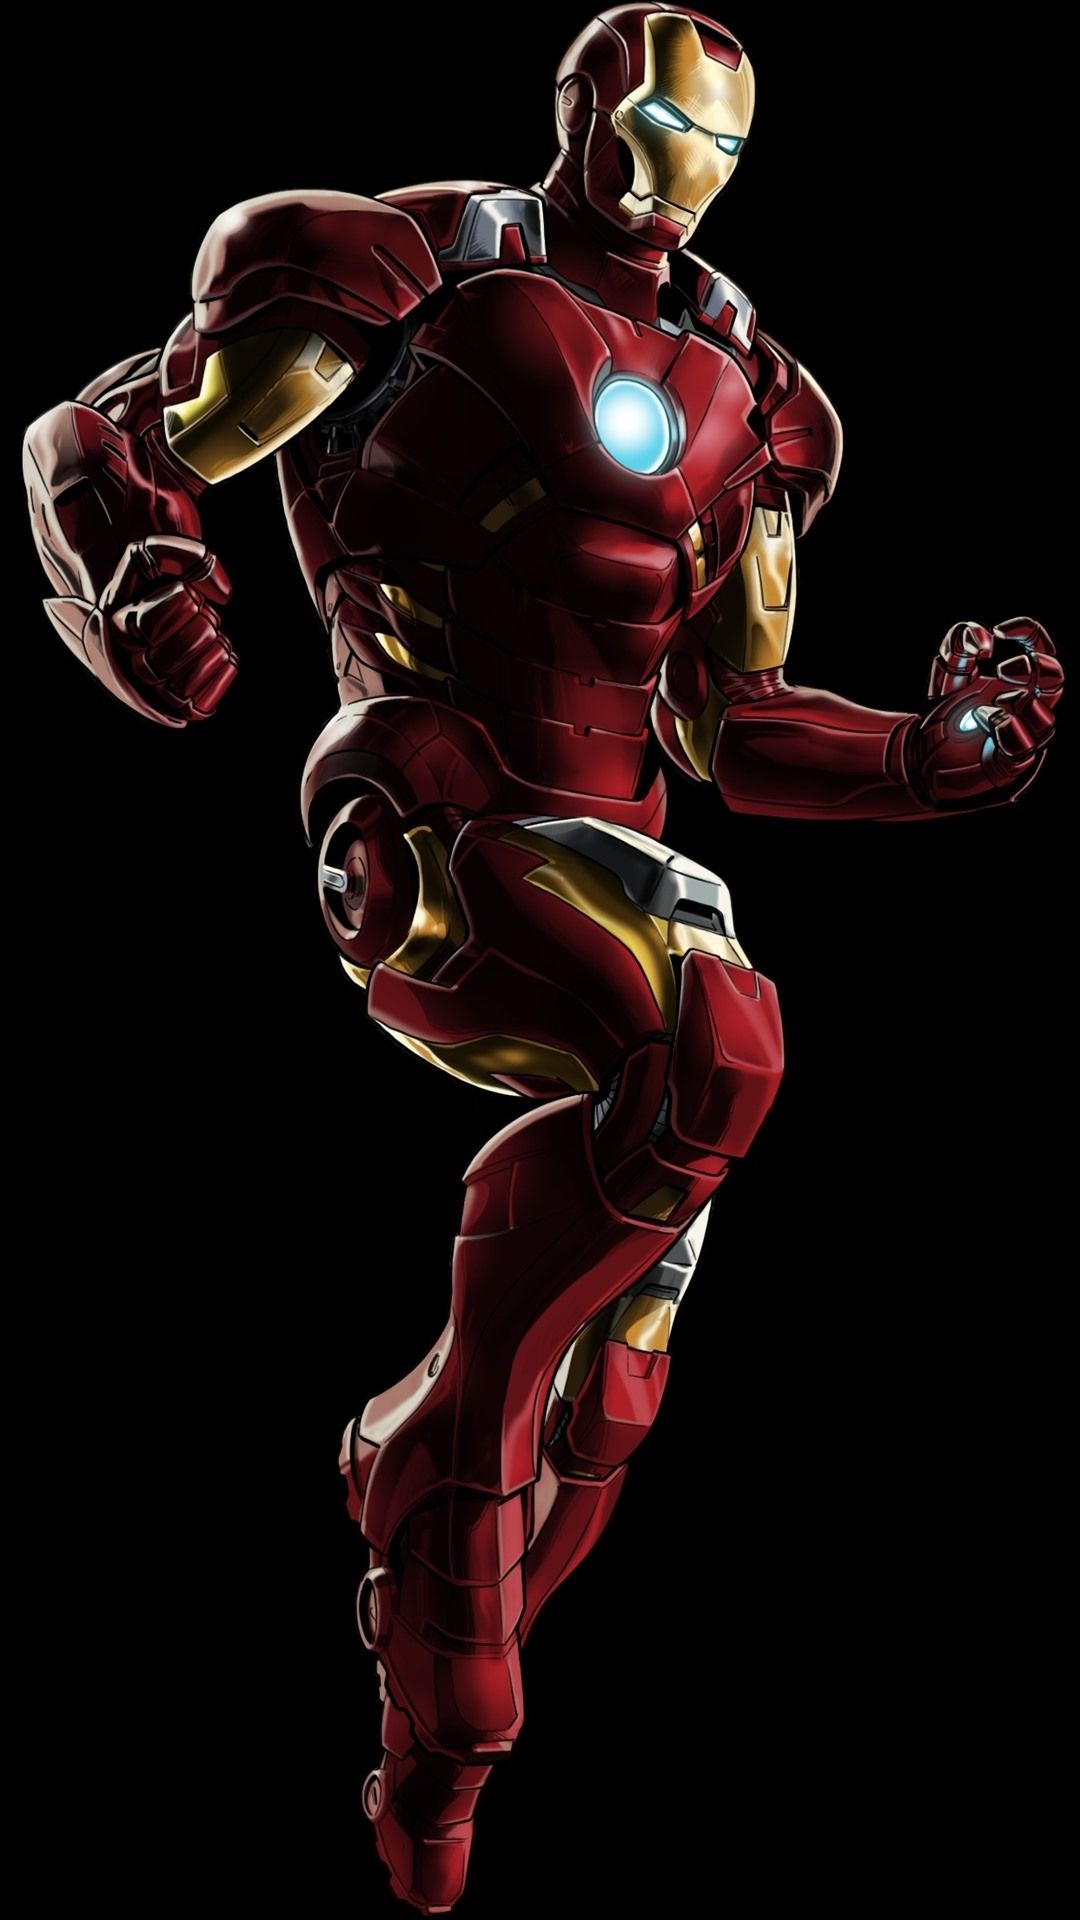 Wallpaper Iron Man, superhero, black background 3840x2160 UHD 4K Picture, Image